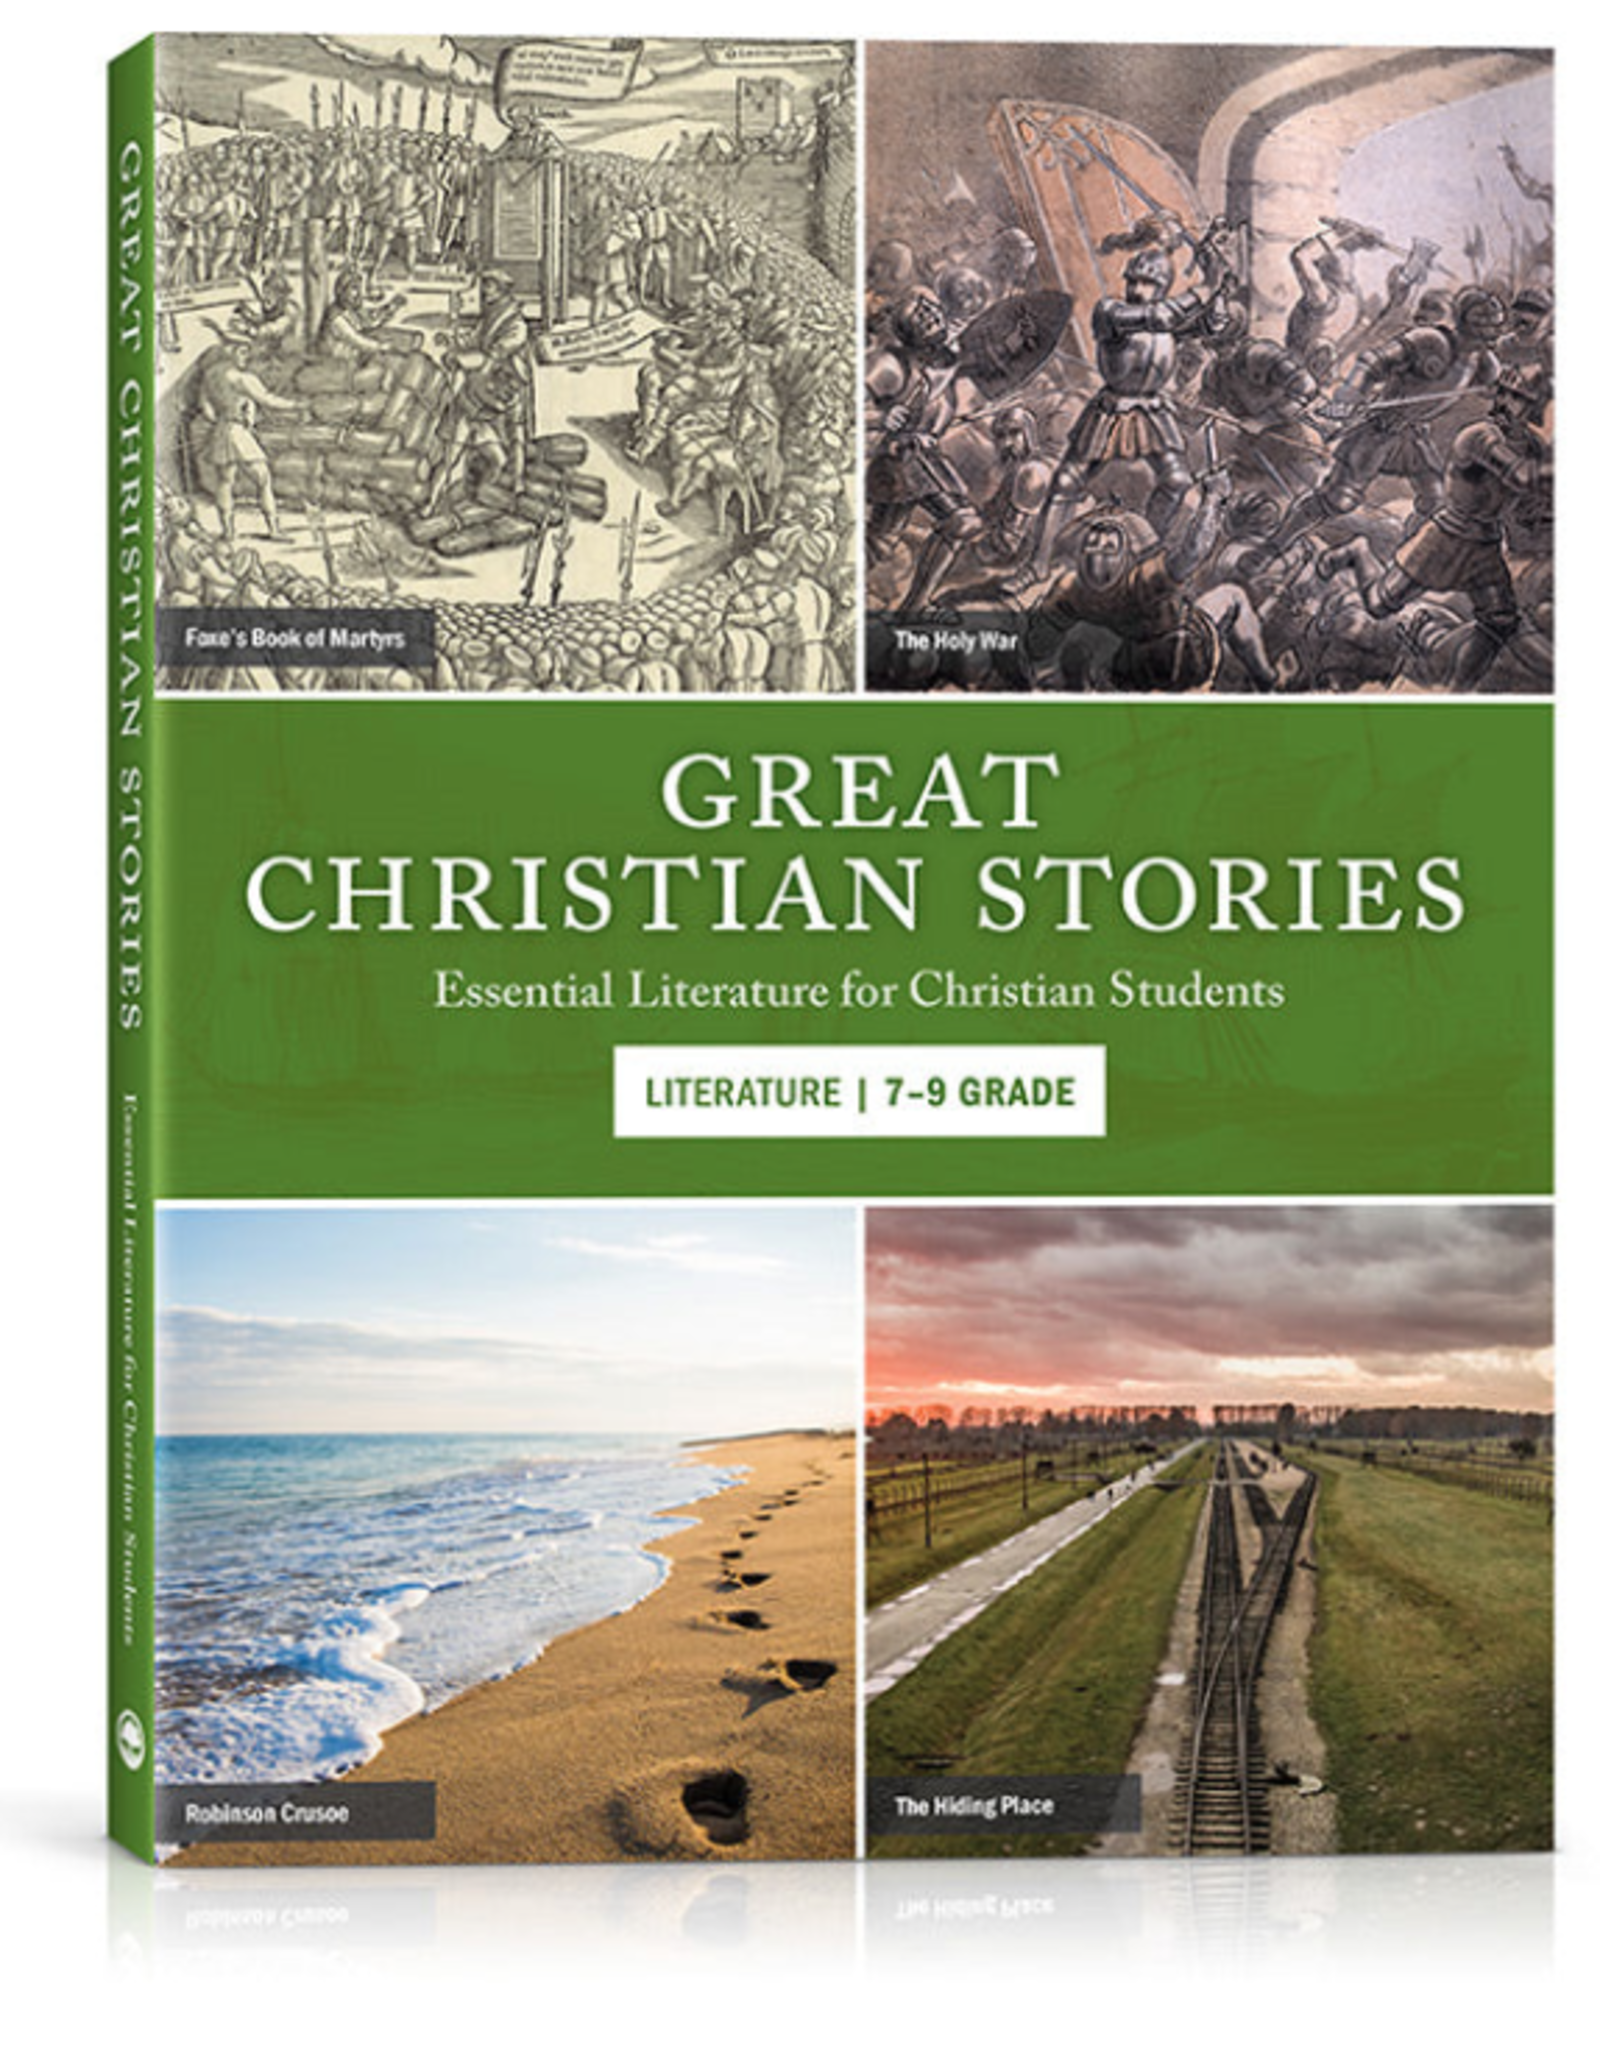 Great Christian Stories - Literature 7-9 Grade Workbook